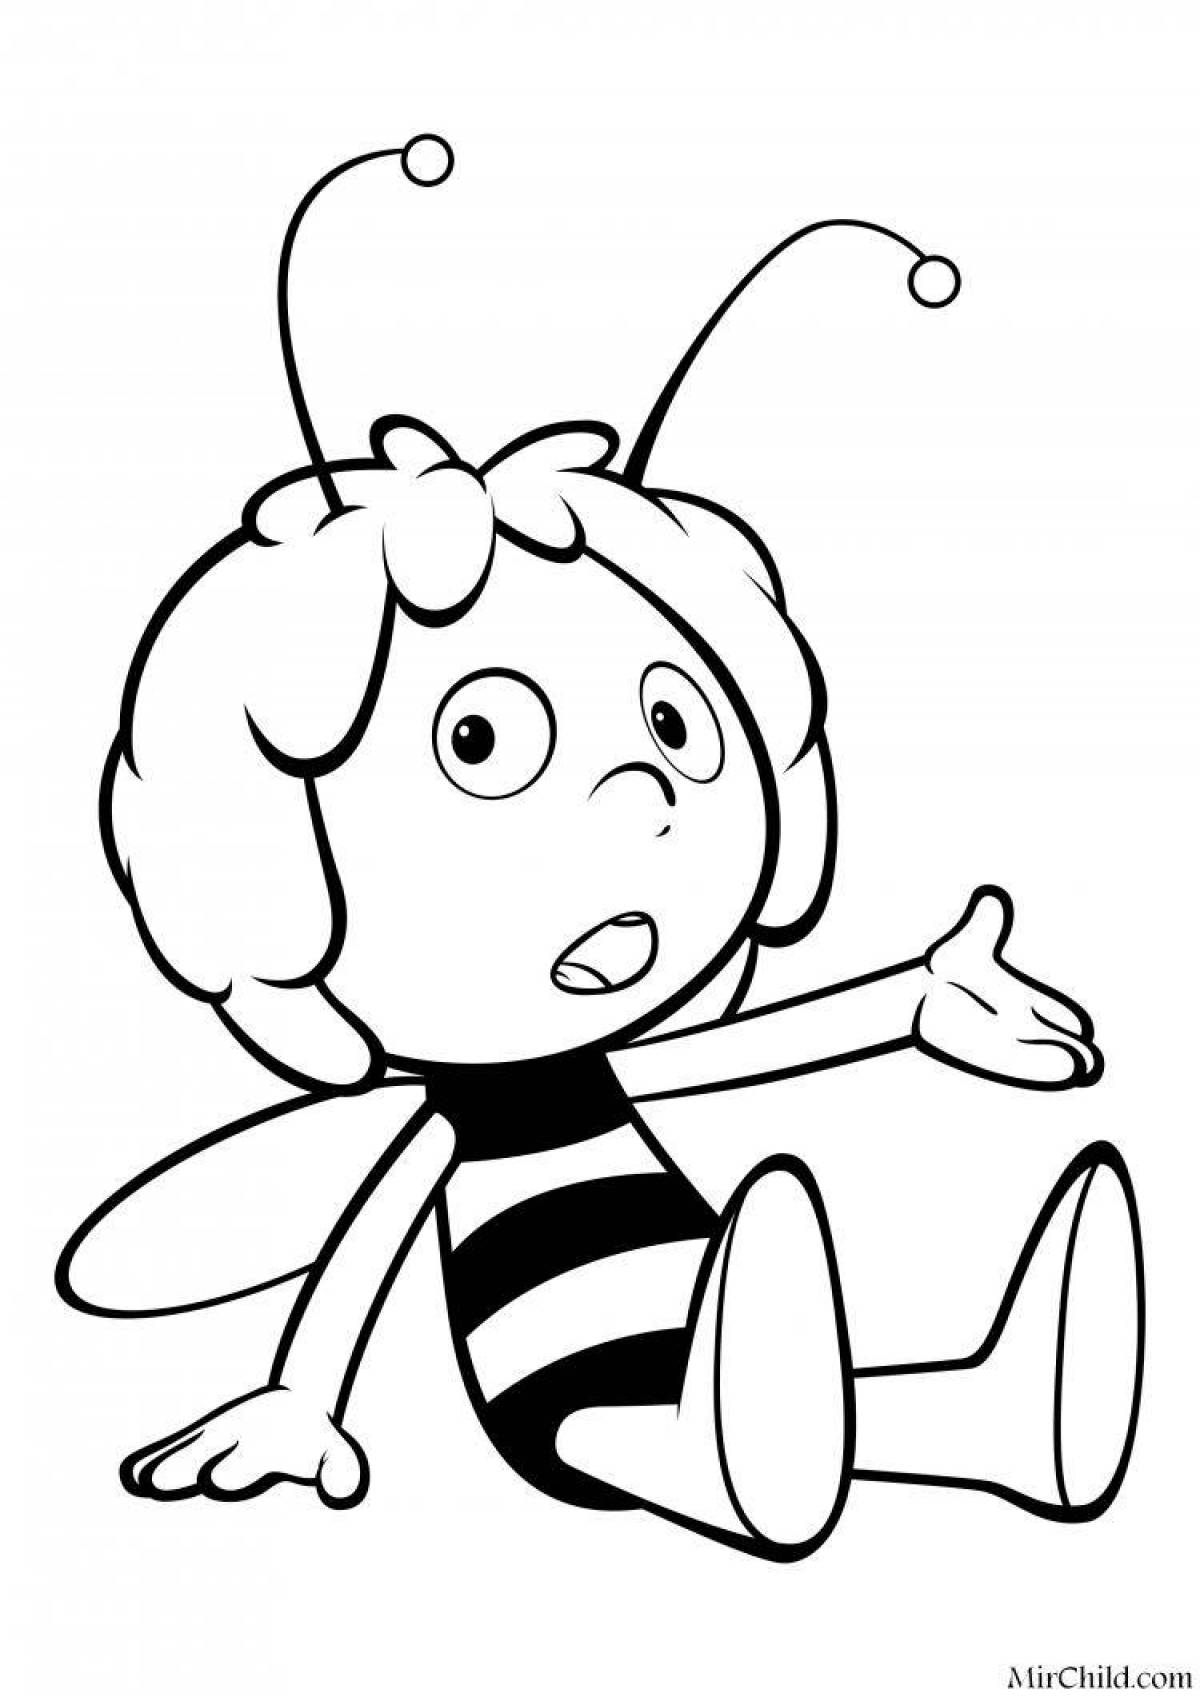 Joyful bee coloring book for kids